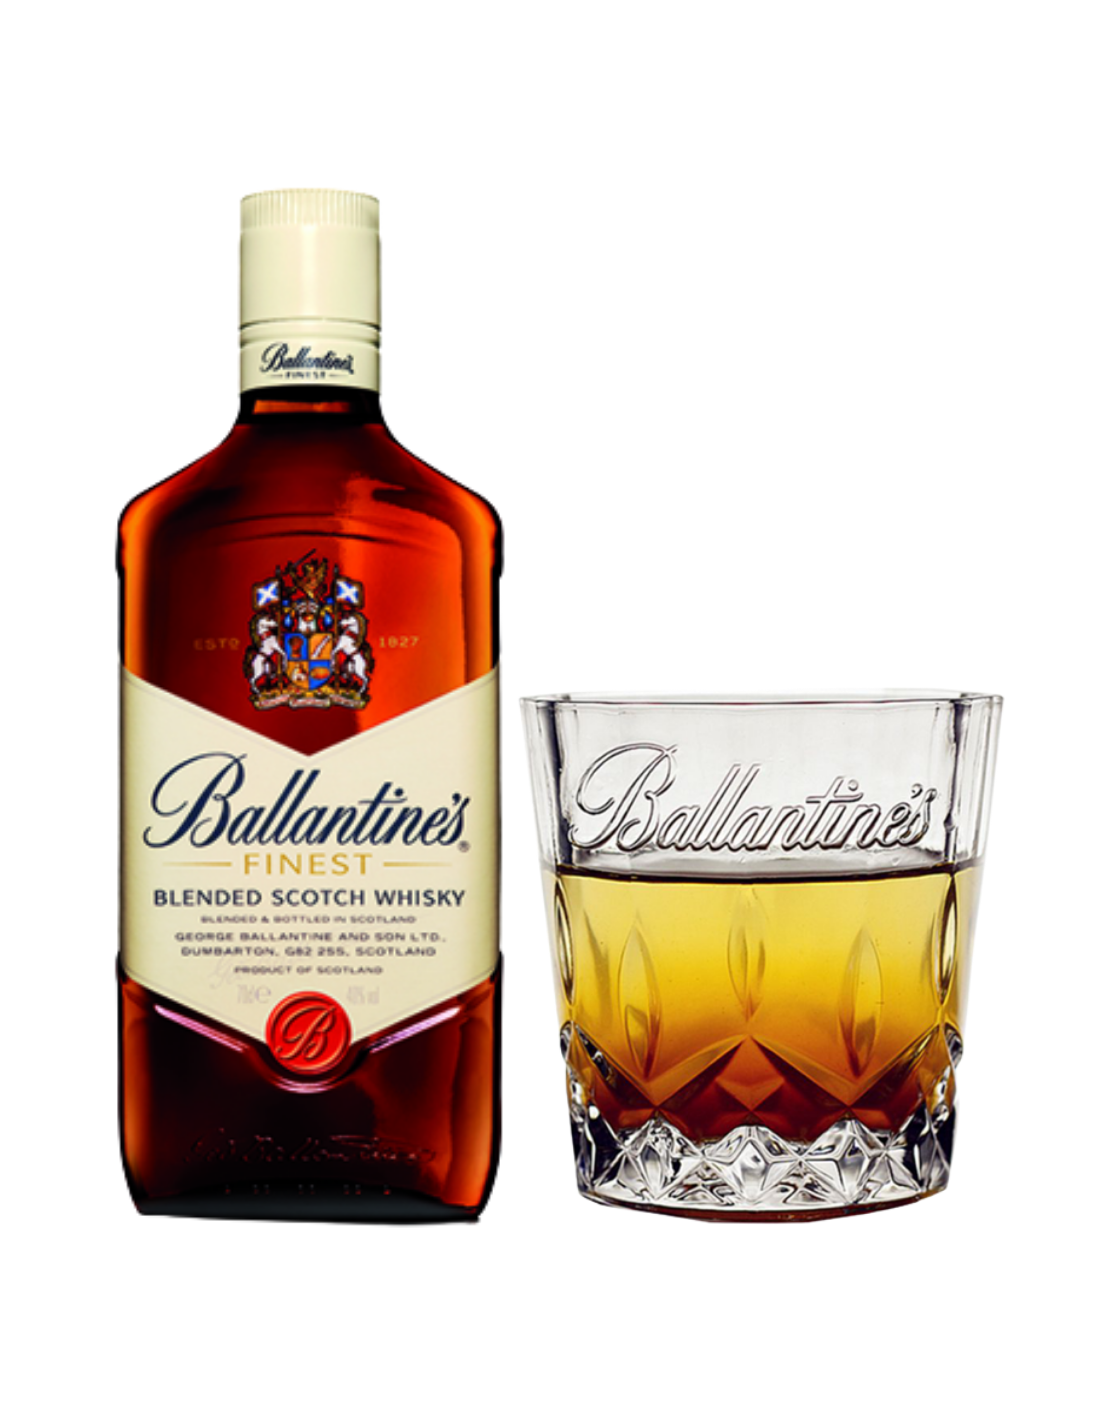 Whisky Ballantine’s Finest Blended Scotch + 1 pahar, 0.7L, 40% alc., Scotia alcooldiscount.ro